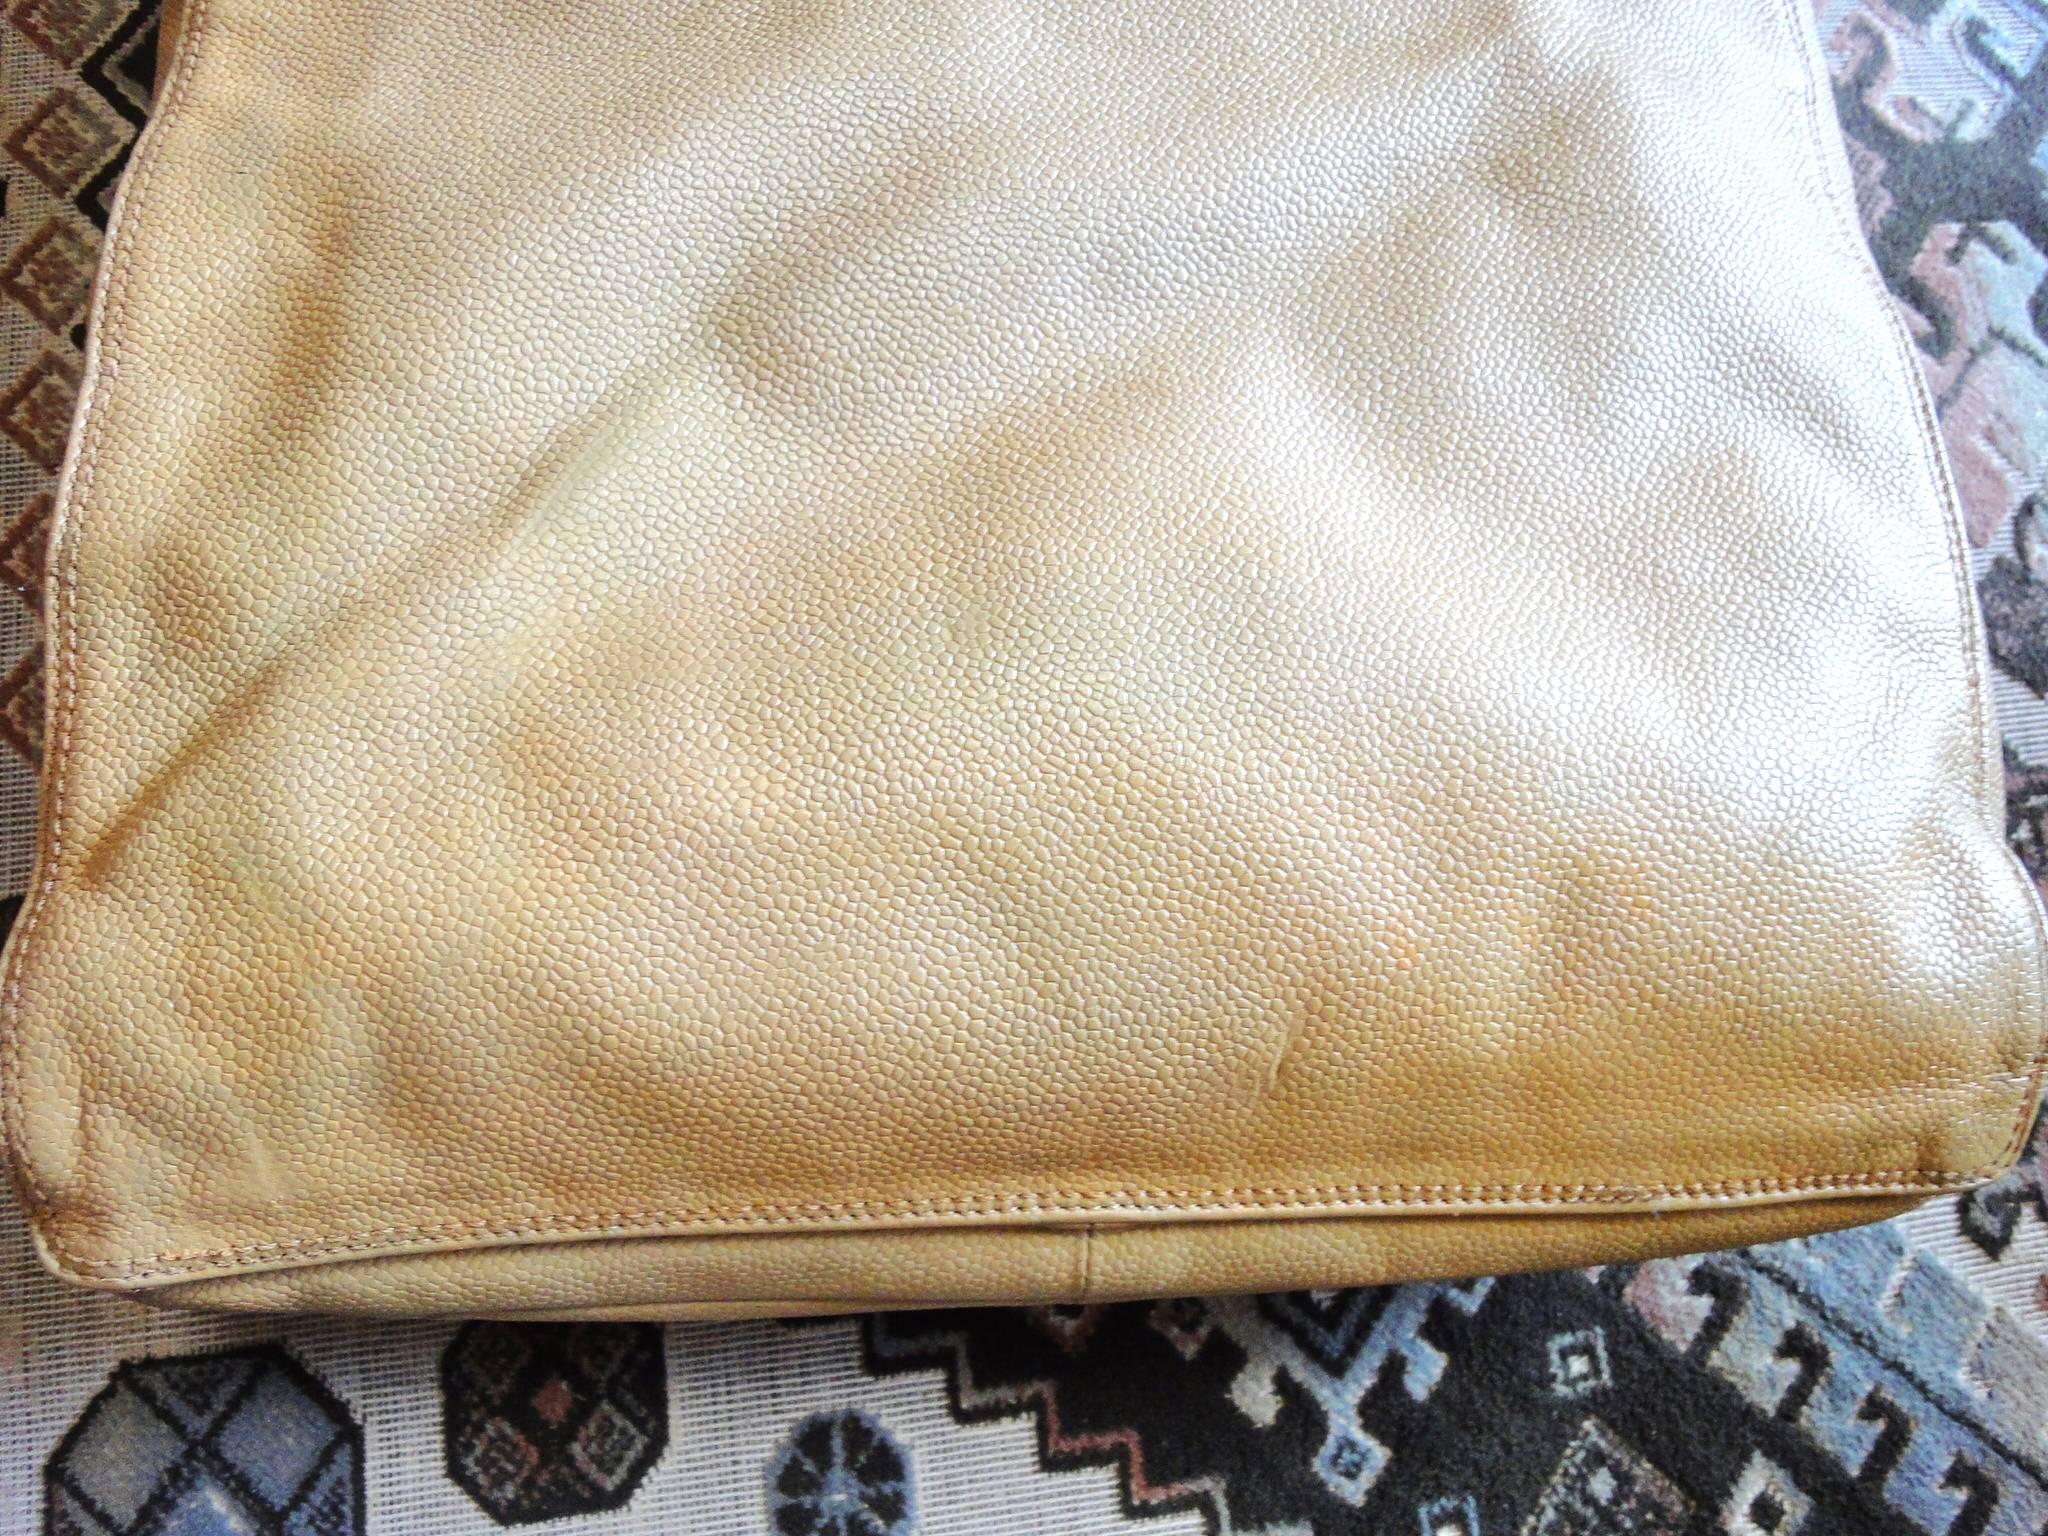 Vintage CHANEL beige caviar large shopper, tote bag with CC stitch mark. 2